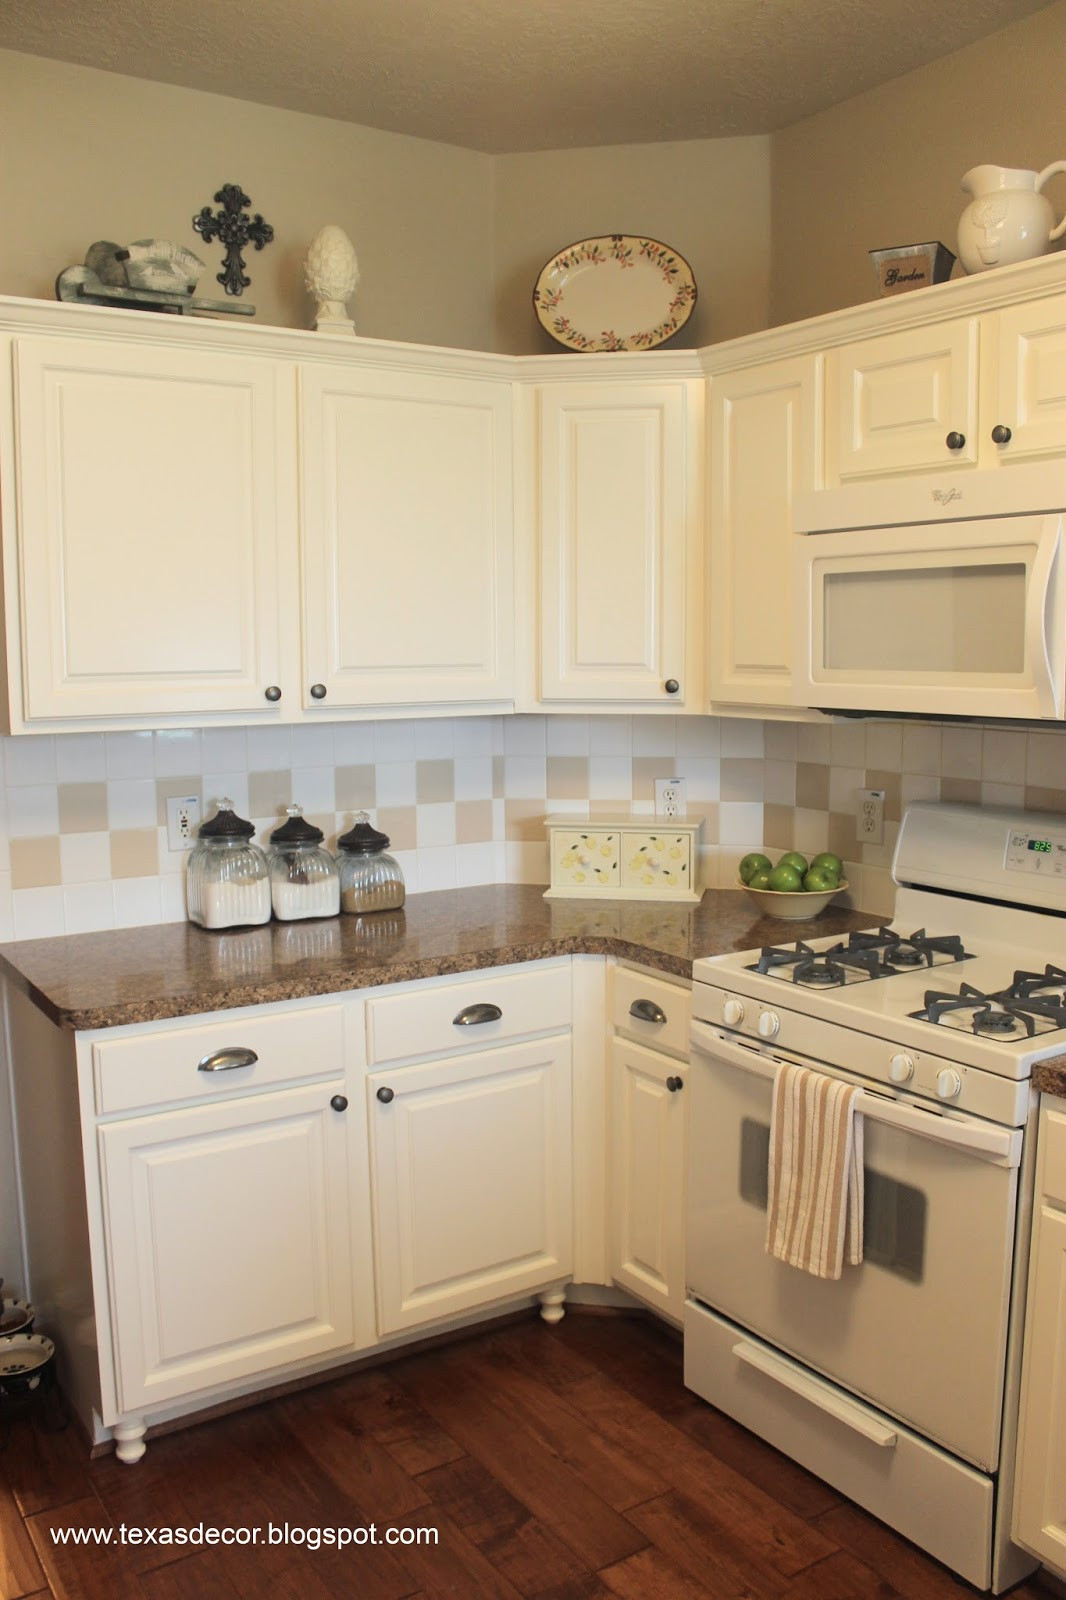 Kitchen Cabinet Paint White
 Texas Decor Painted Kitchen Cabinet Reveal